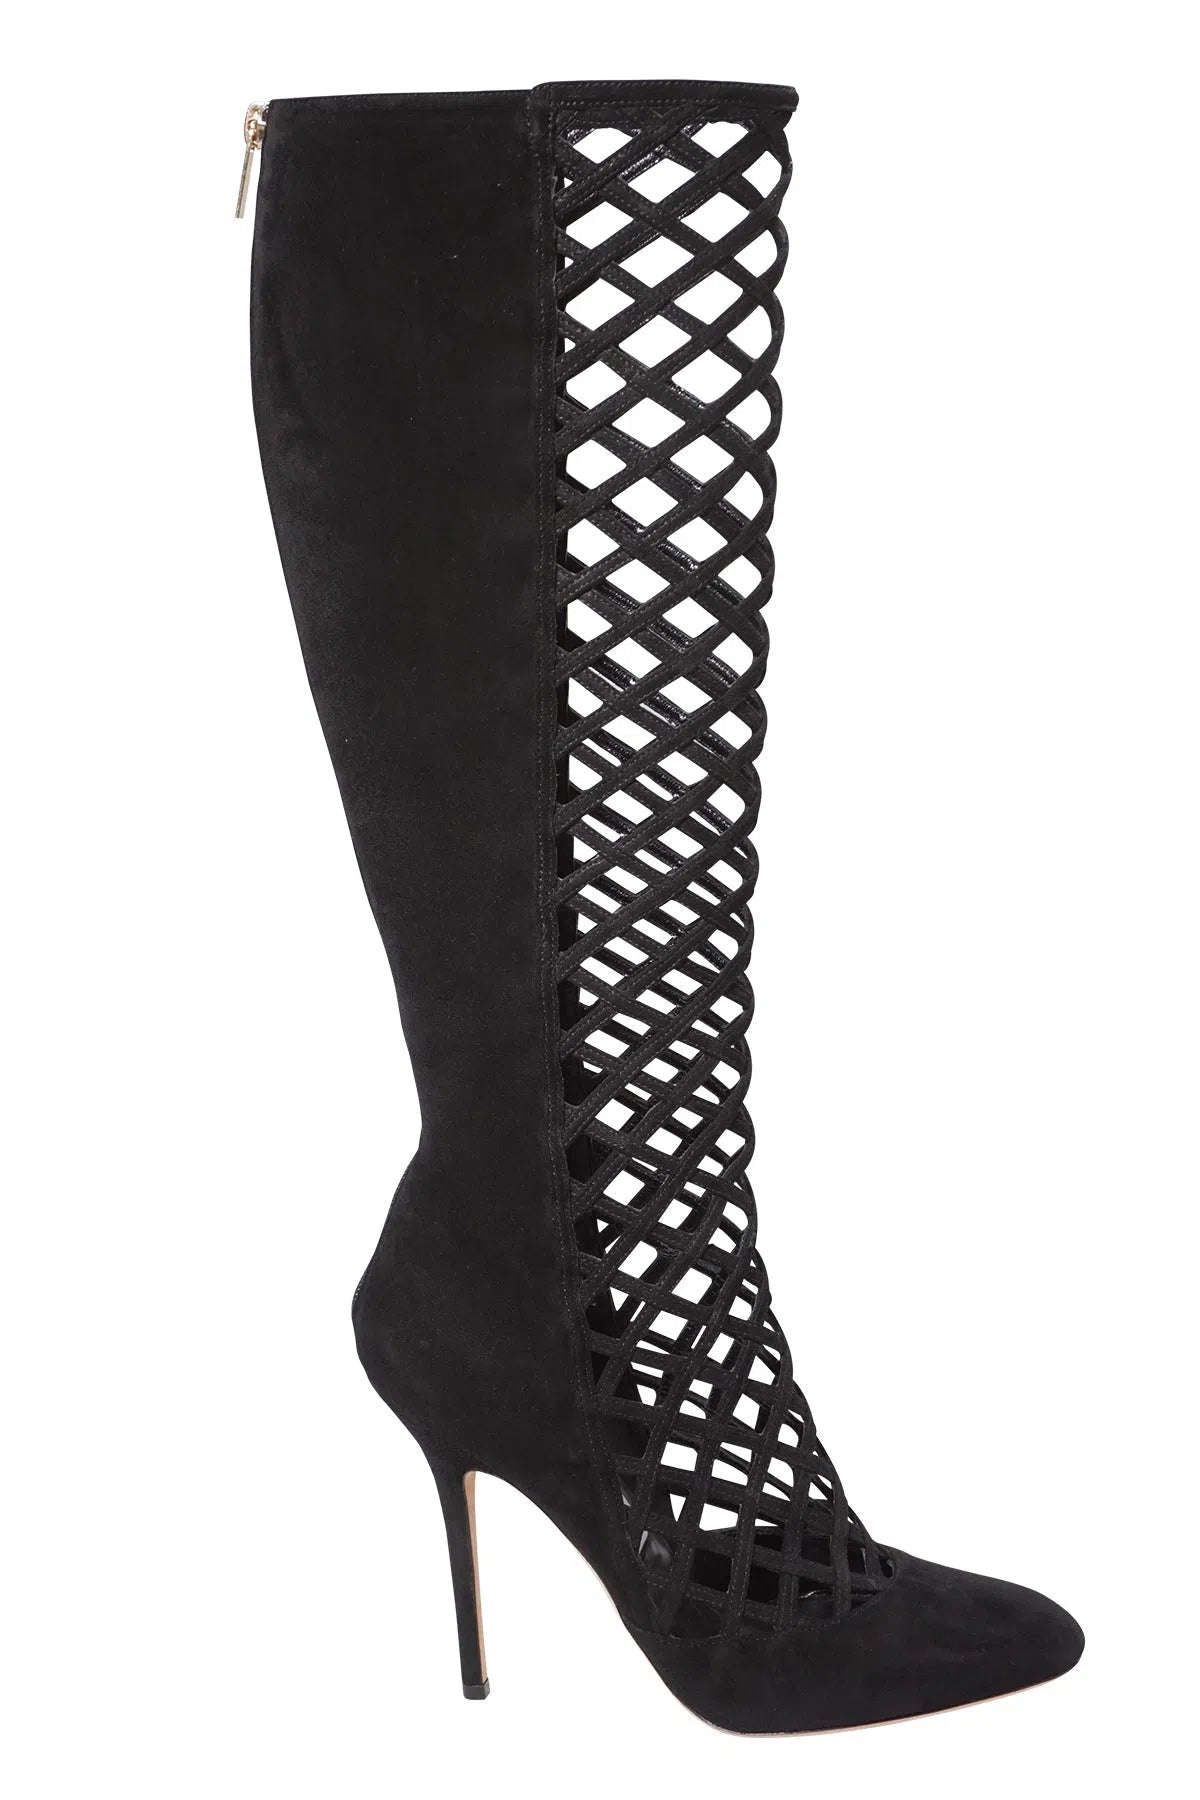 Jimmy Choo Black Suede Delta Lattice Knee Boots Size 38 - Foxy Couture Carmel